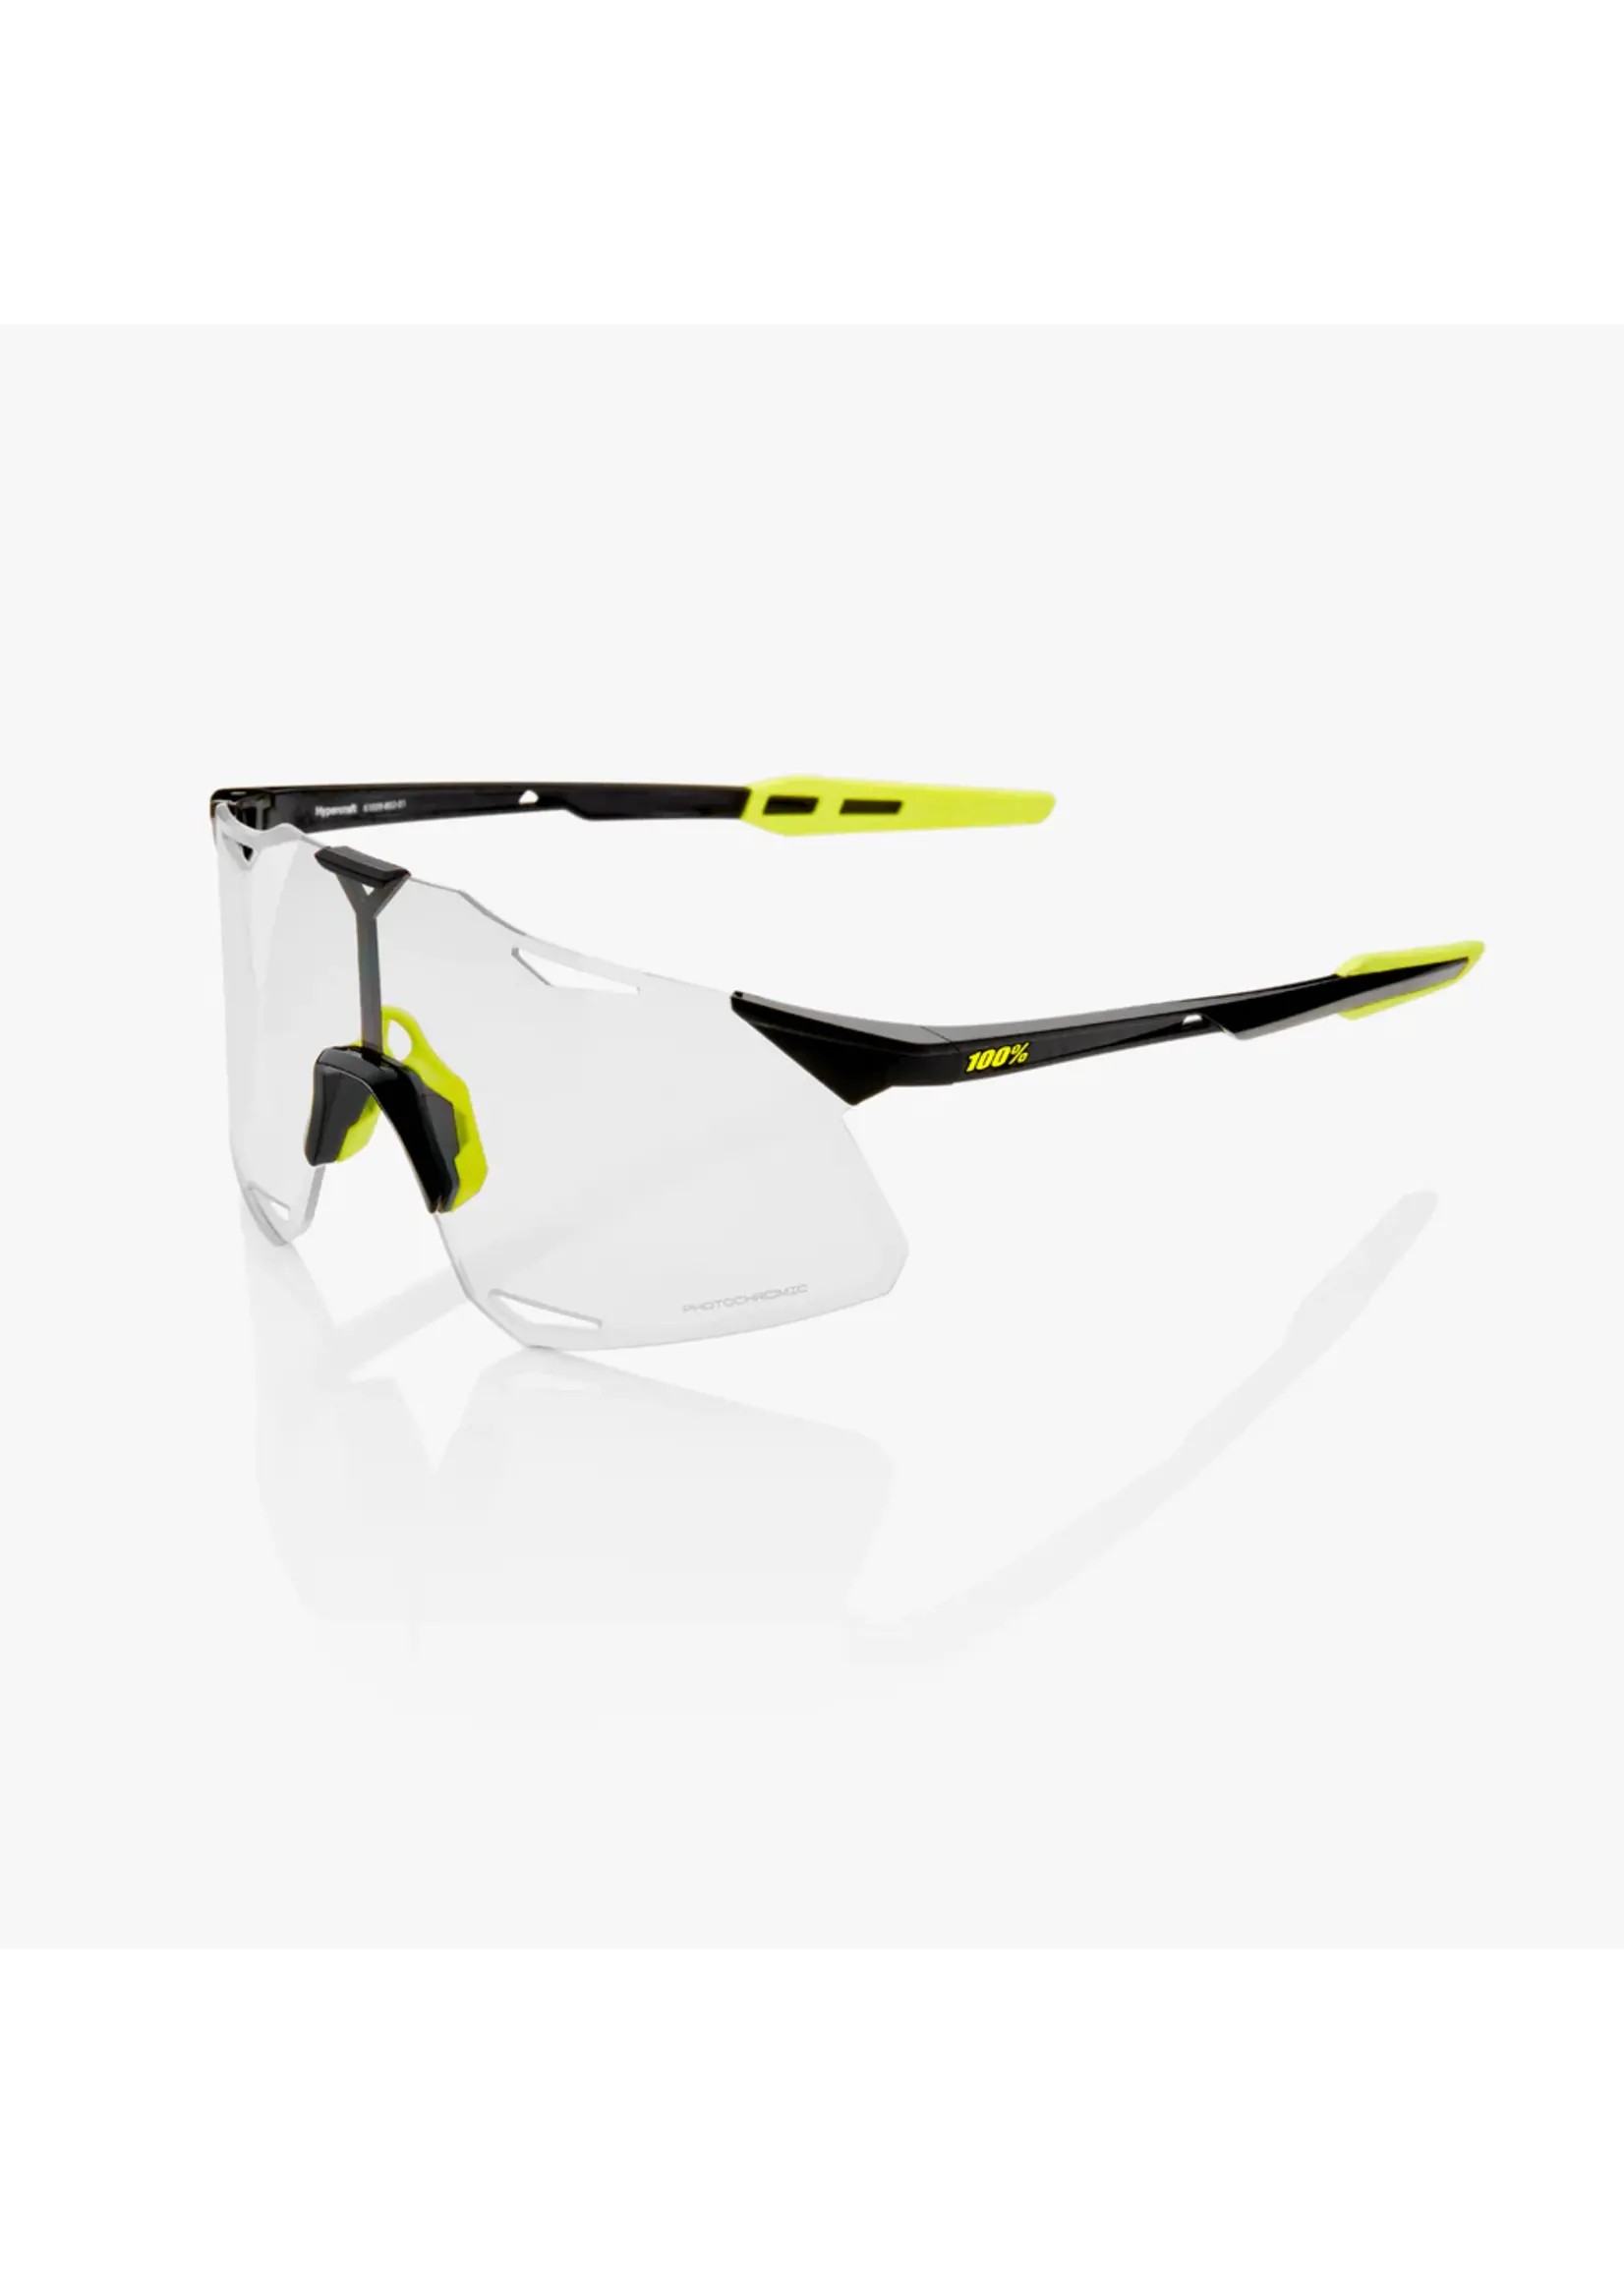 100 Percent 100% Hypercraft Sunglasses - Gloss Black - Photochromic Lens